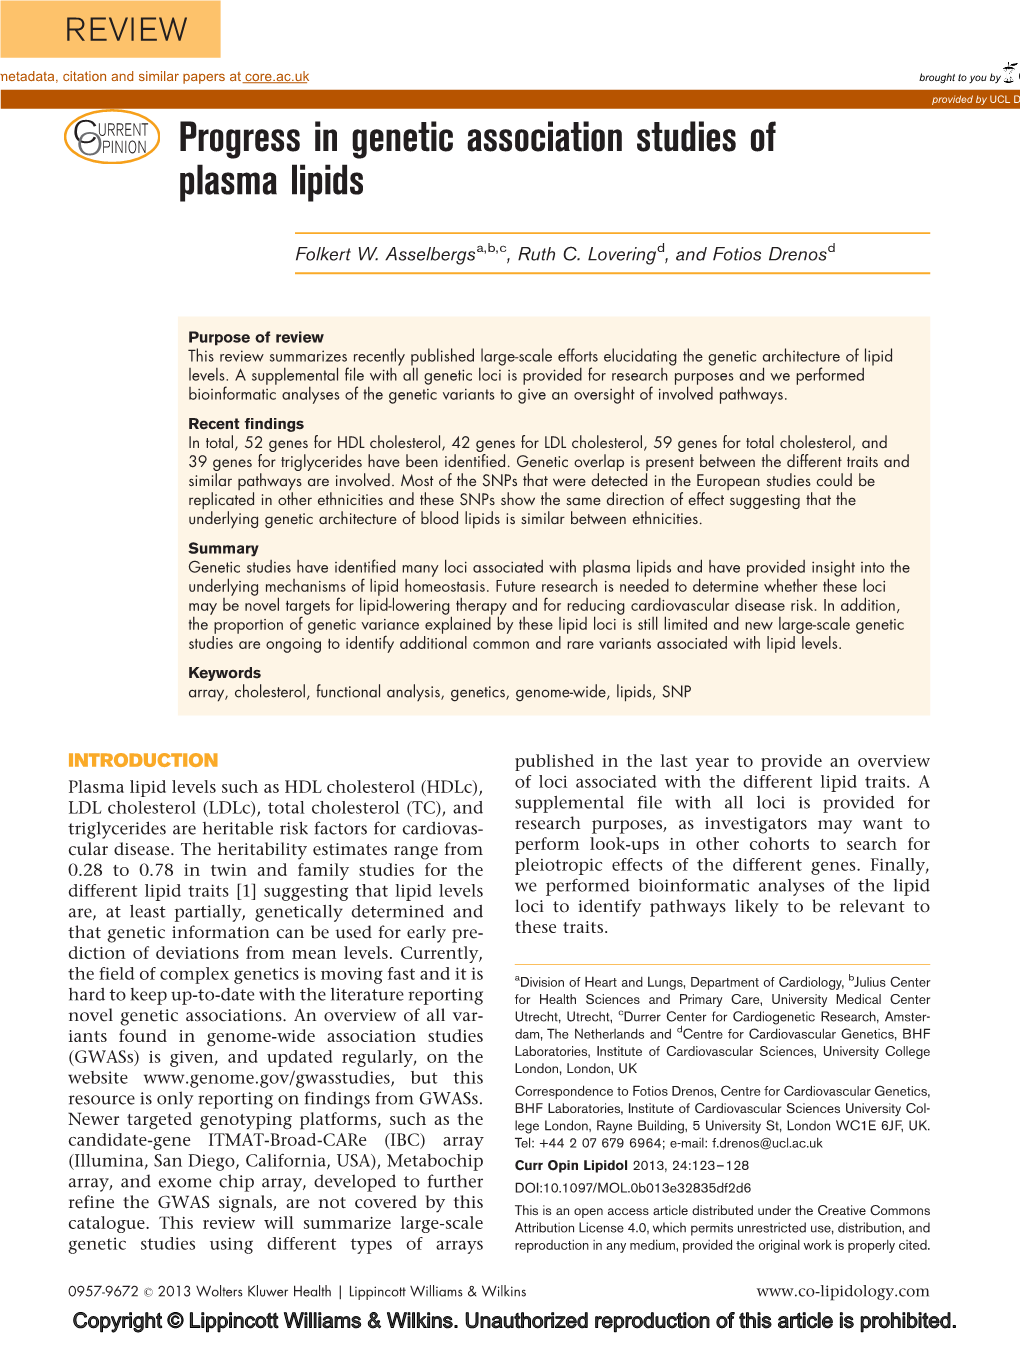 Progress in Genetic Association Studies of Plasma Lipids